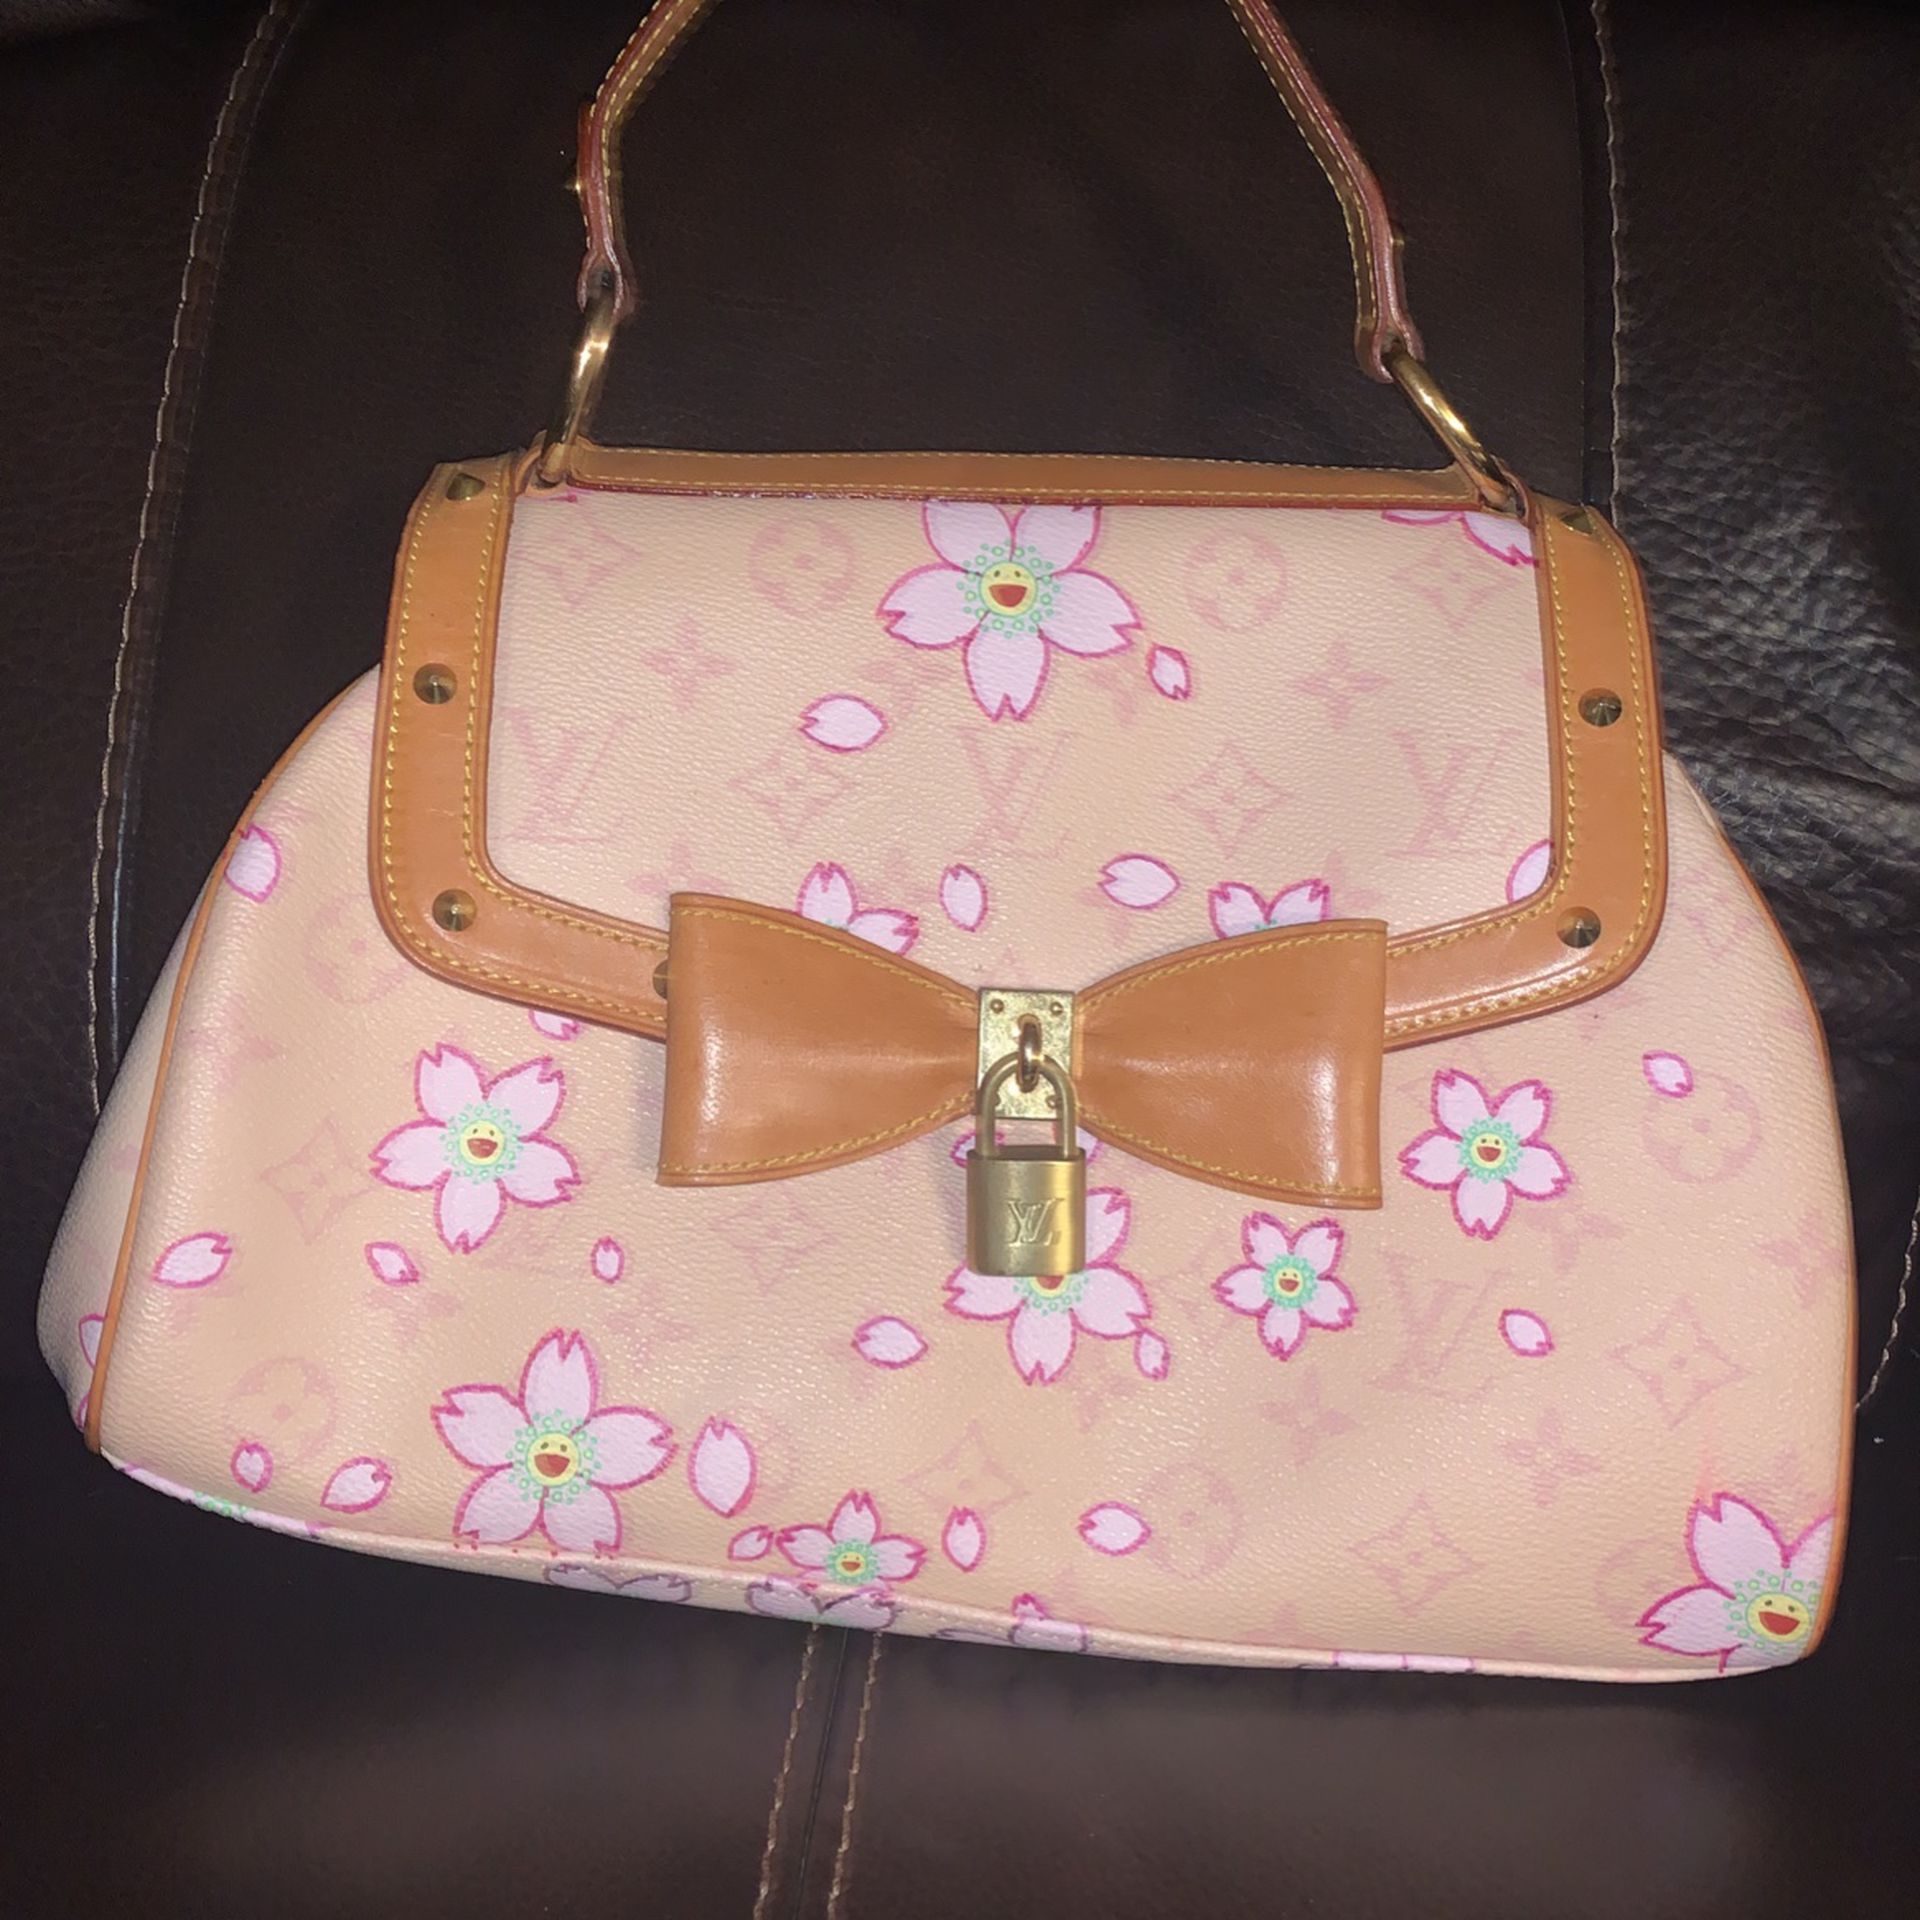 Louis Vuitton Retro Bag Limited Edition Cherry Blossom Monogram